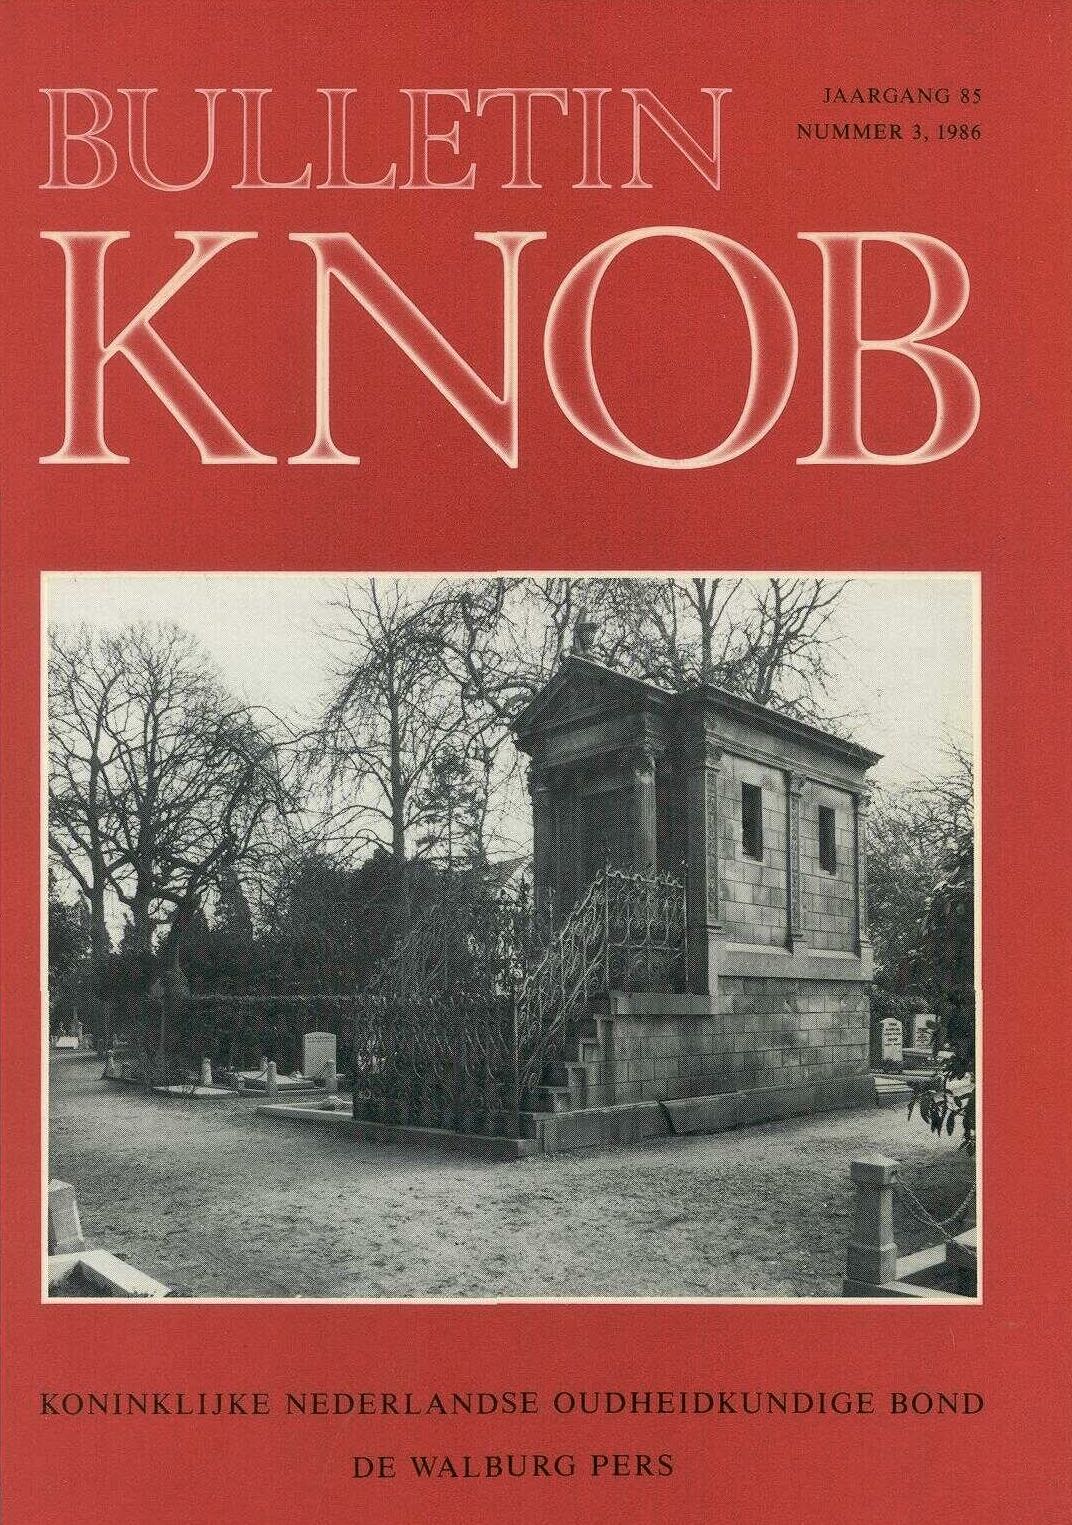 						Toon Bulletin KNOB 85 (1986) 3
					